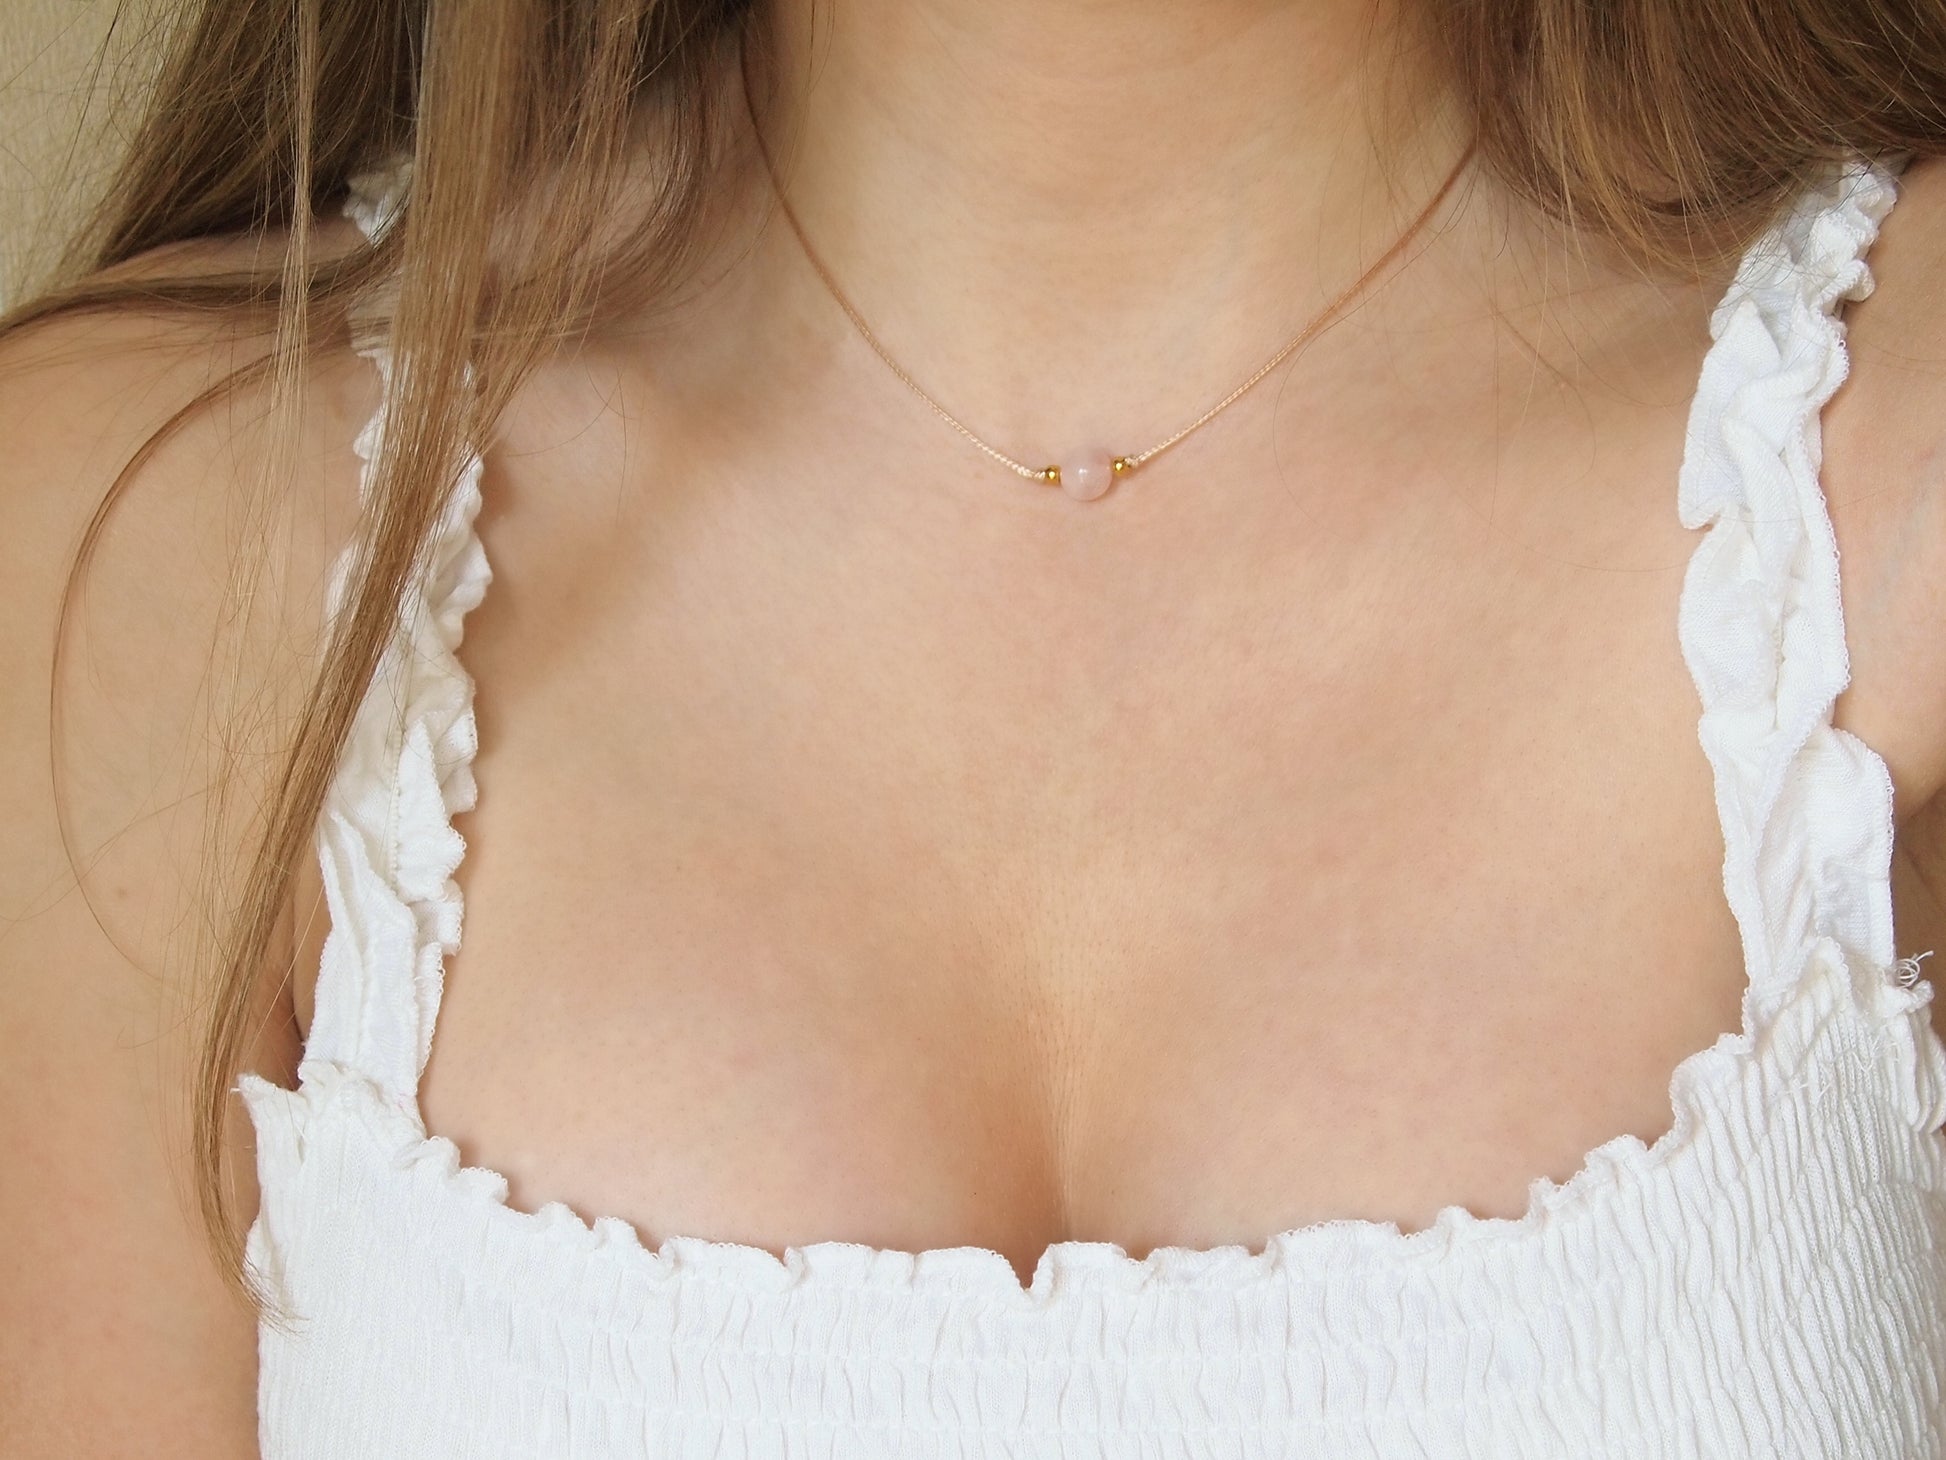 rose quartz necklace on cord, boho style jewelry